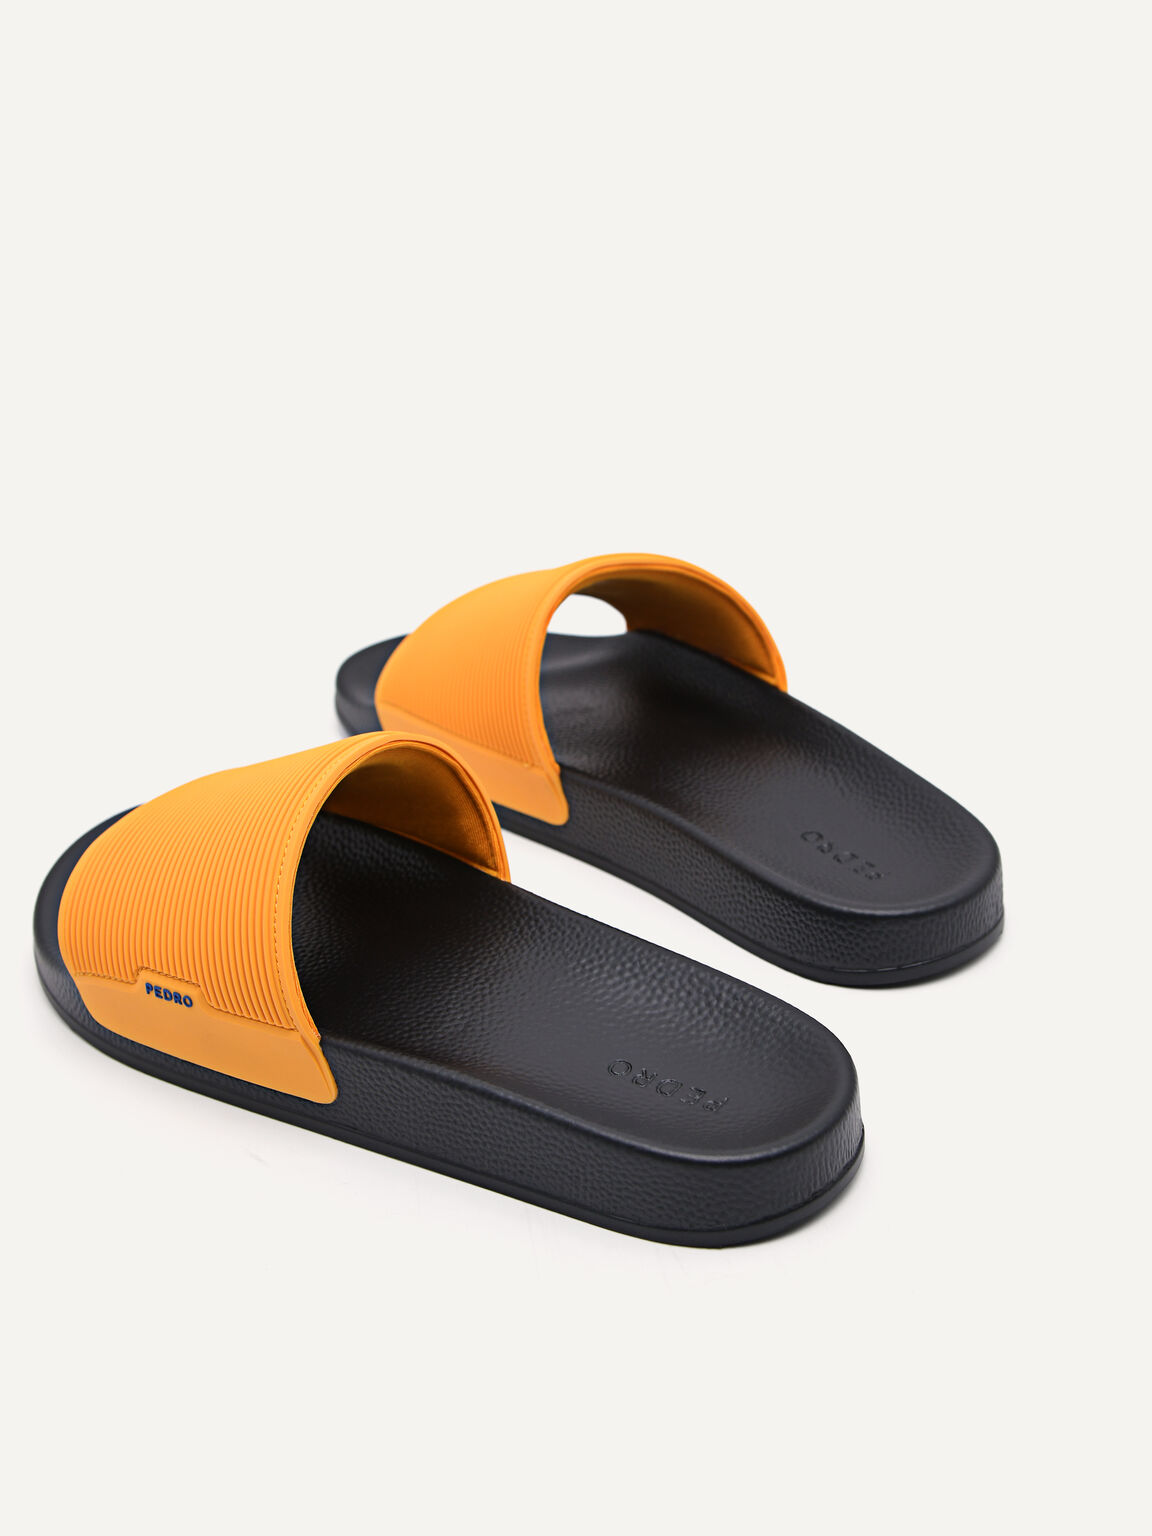 Slide Sandals, Yellow